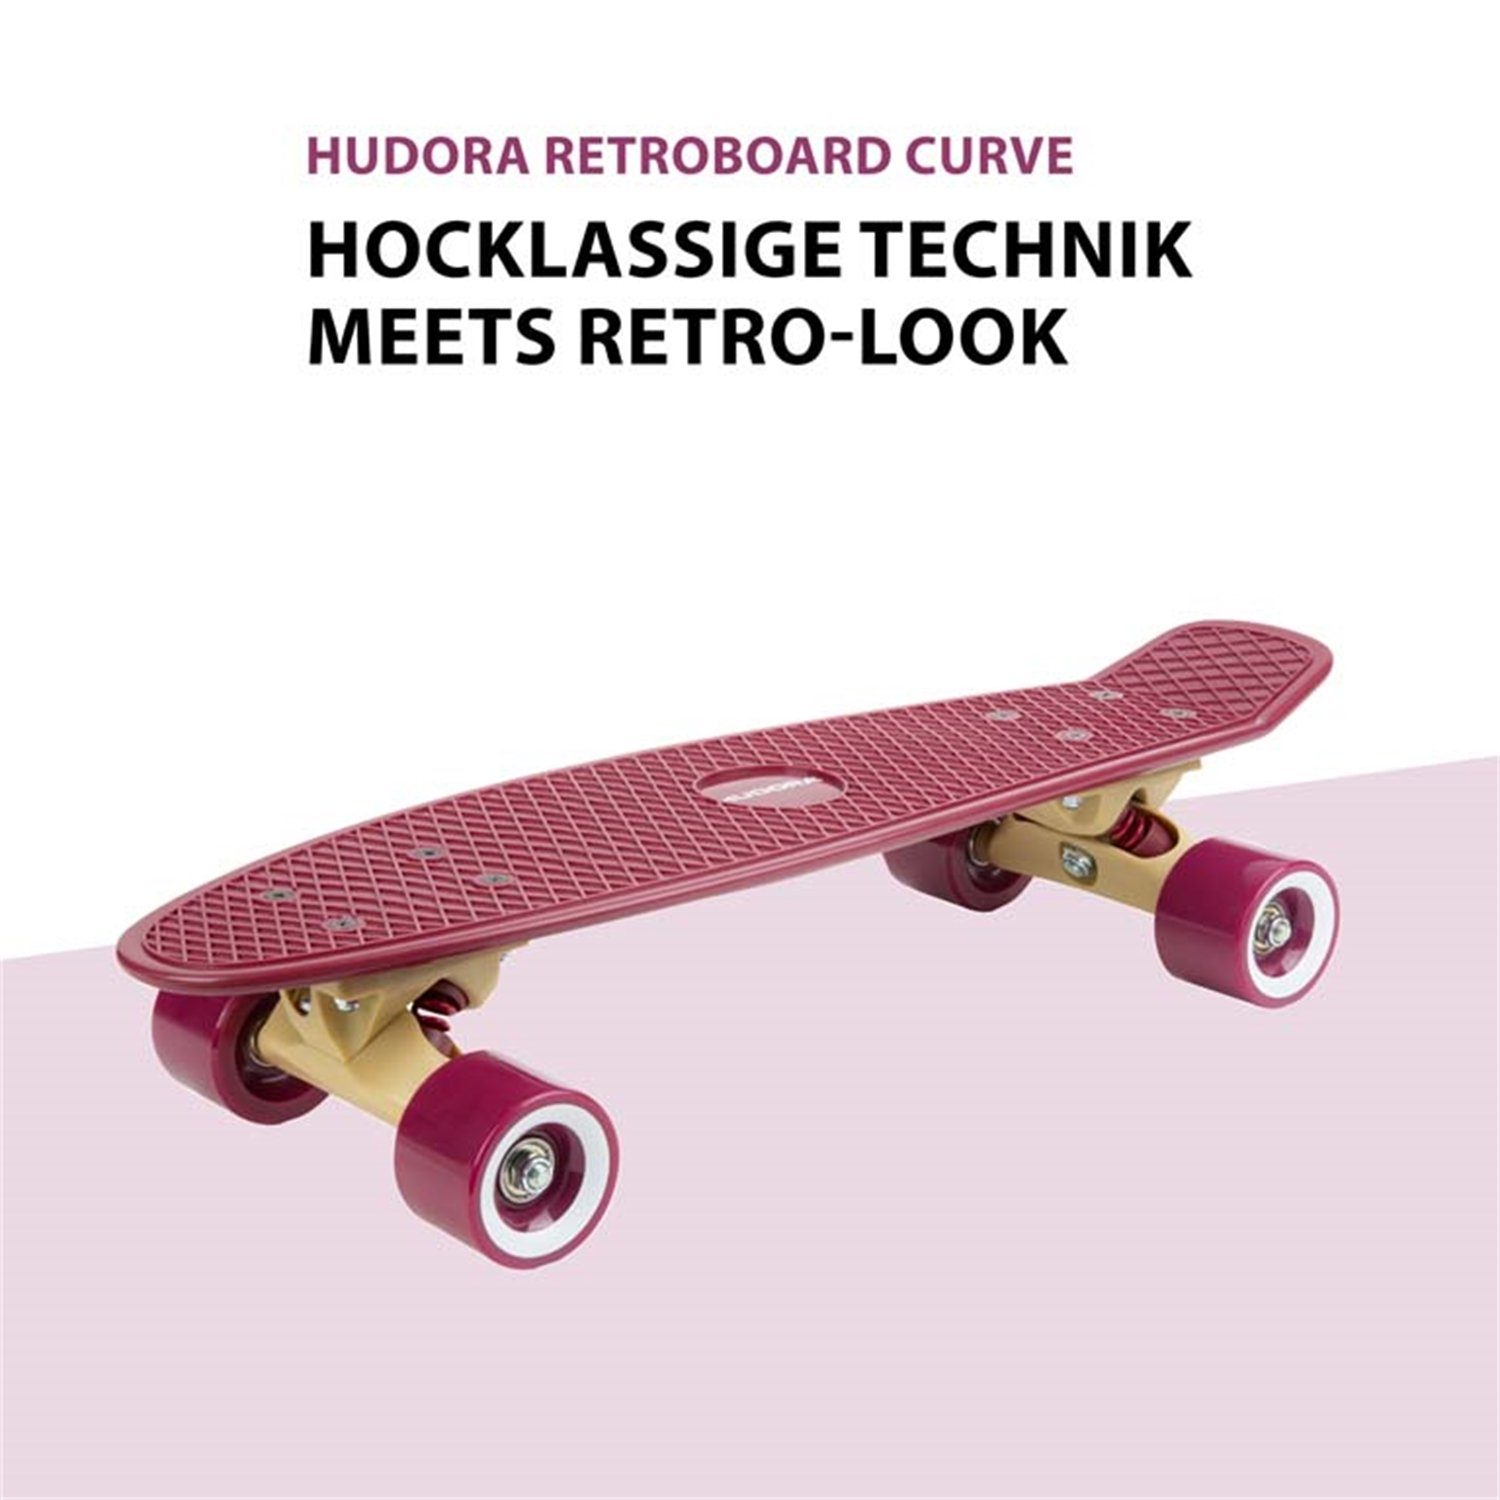 Hudora Scooter 12153 Retro burgundy Board Curve